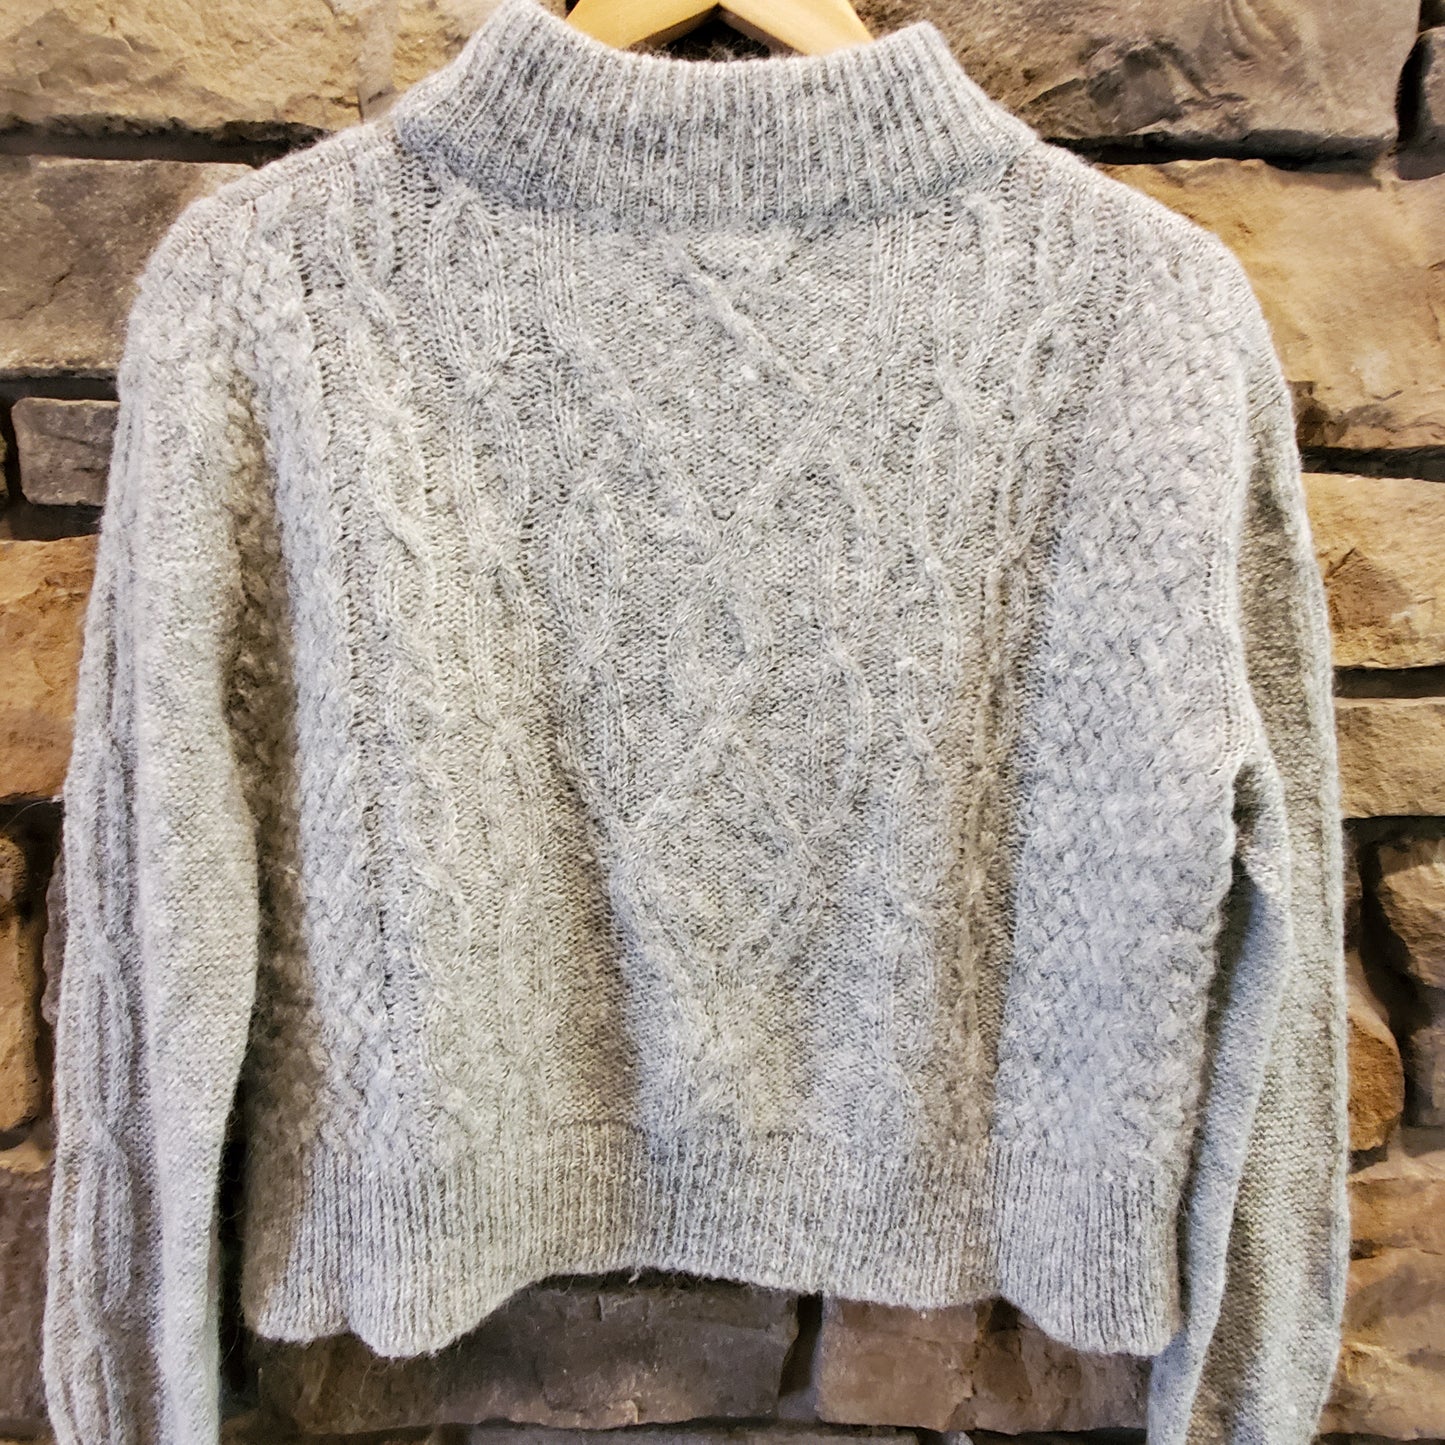 Joie Long Sleeve Mock-Neck Sweater - Gray - S